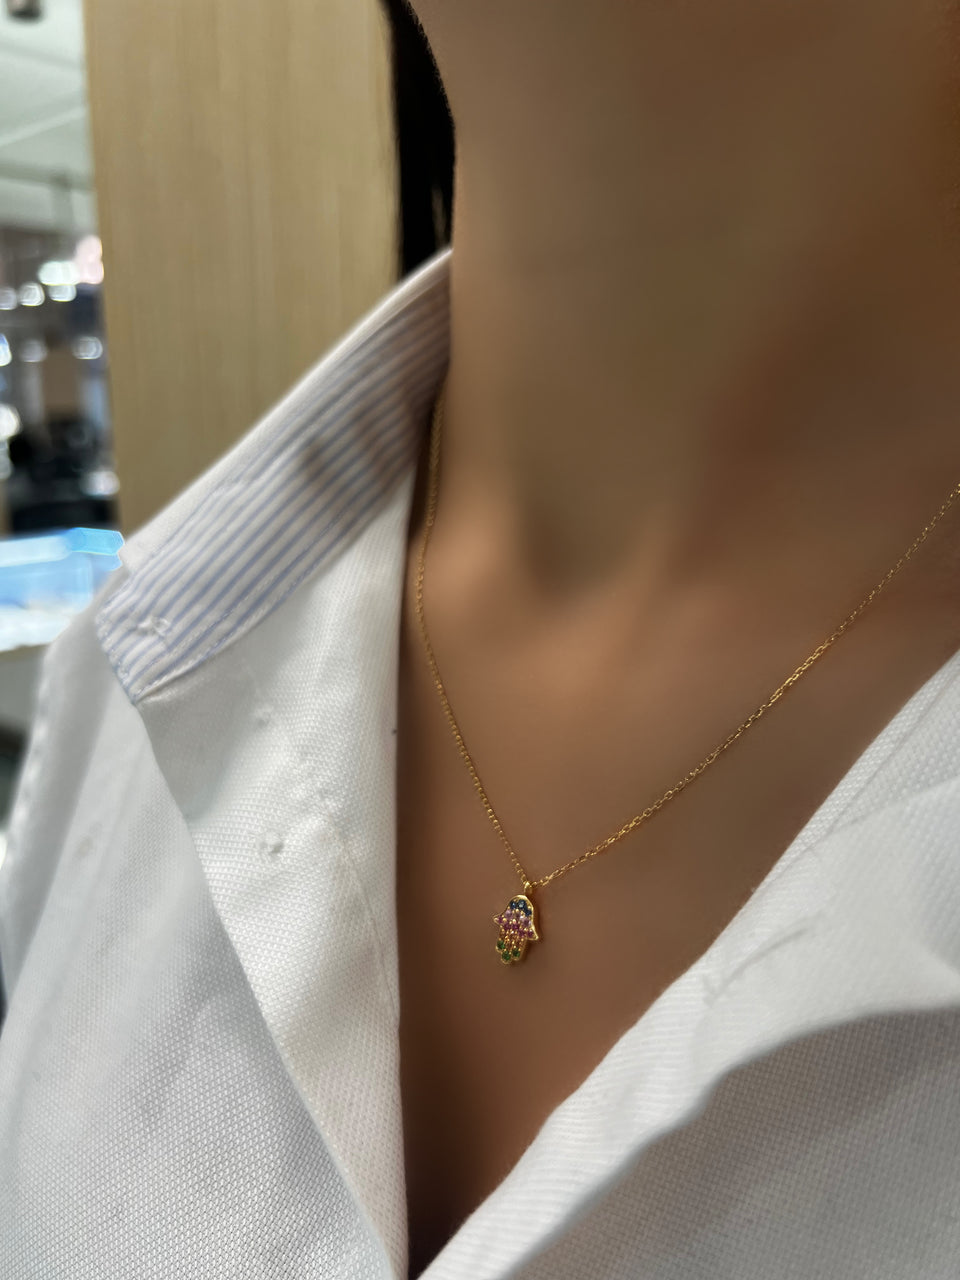 Hamsa Multi-Color Rainbow Sapphire 18k Yellow Gold Necklace